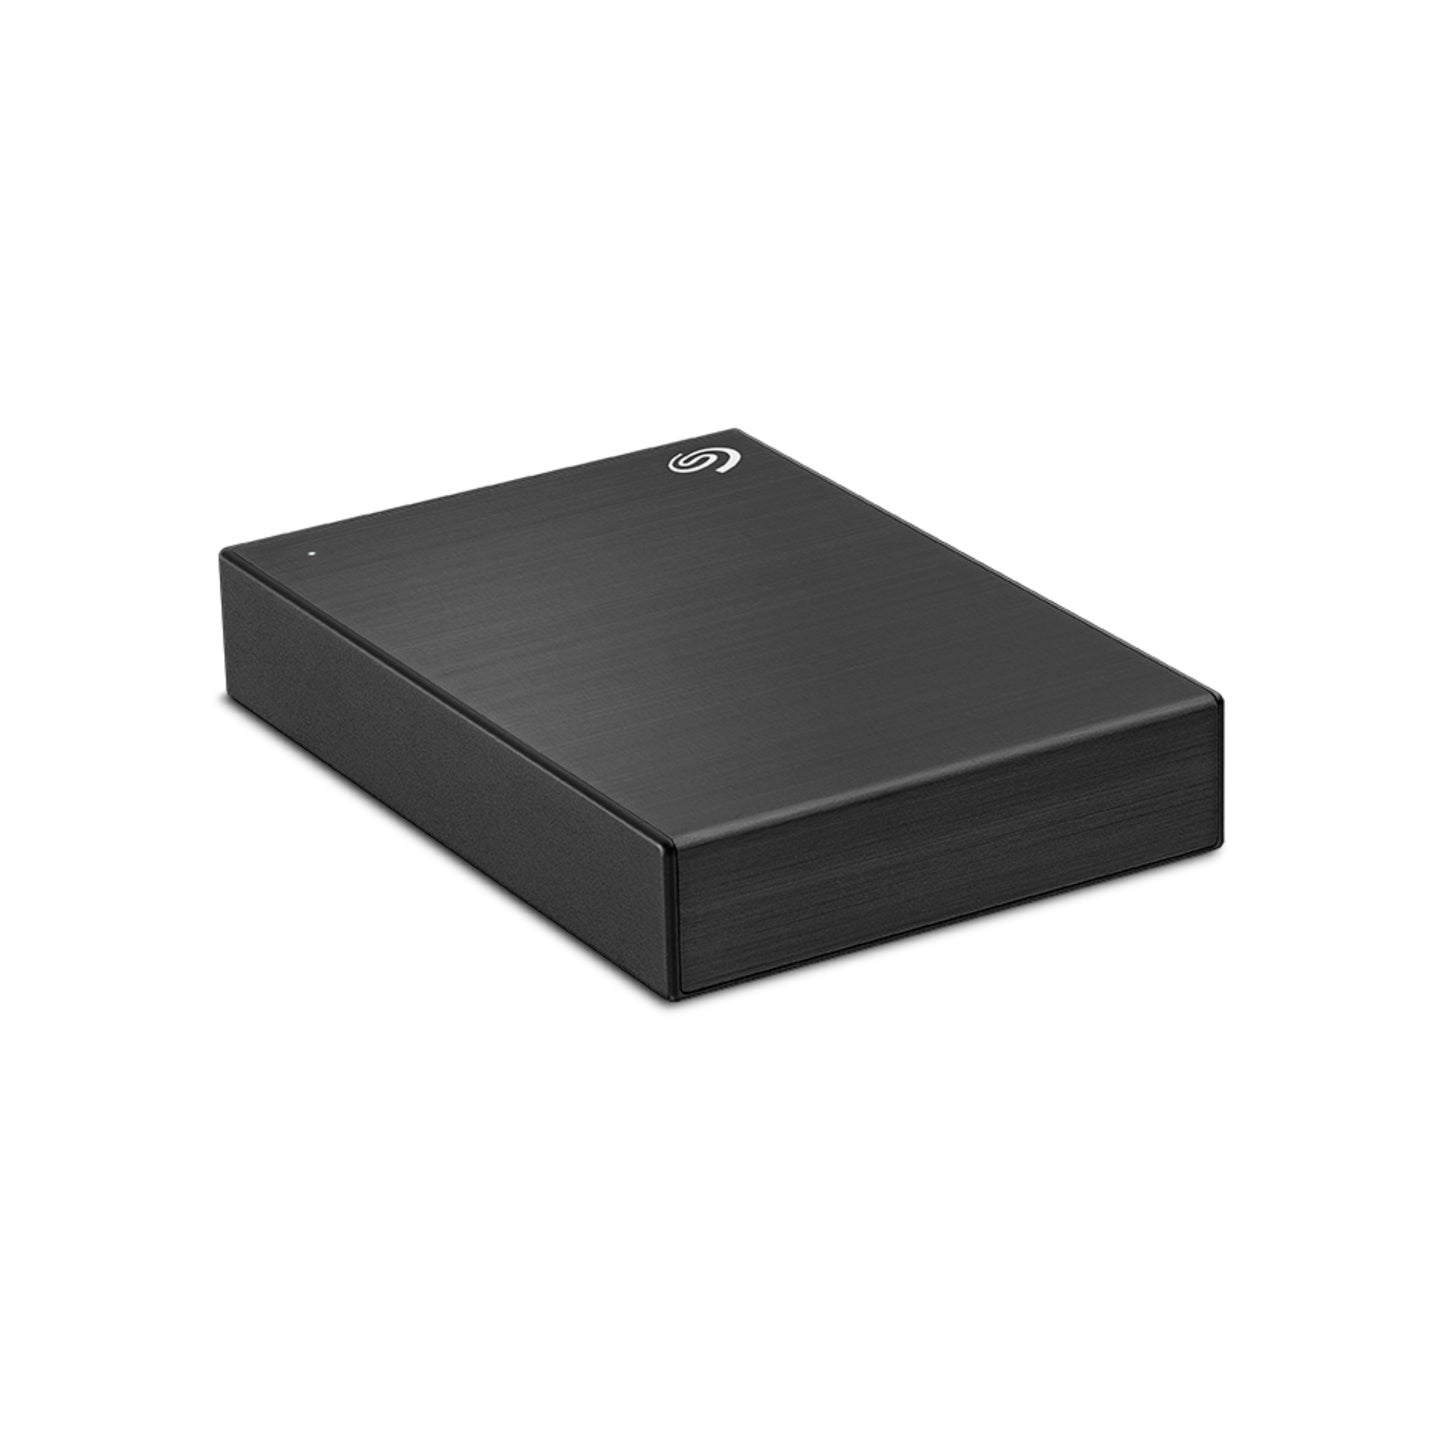 SEAGATE One Touch Slim USB 3.0 1TB - Black